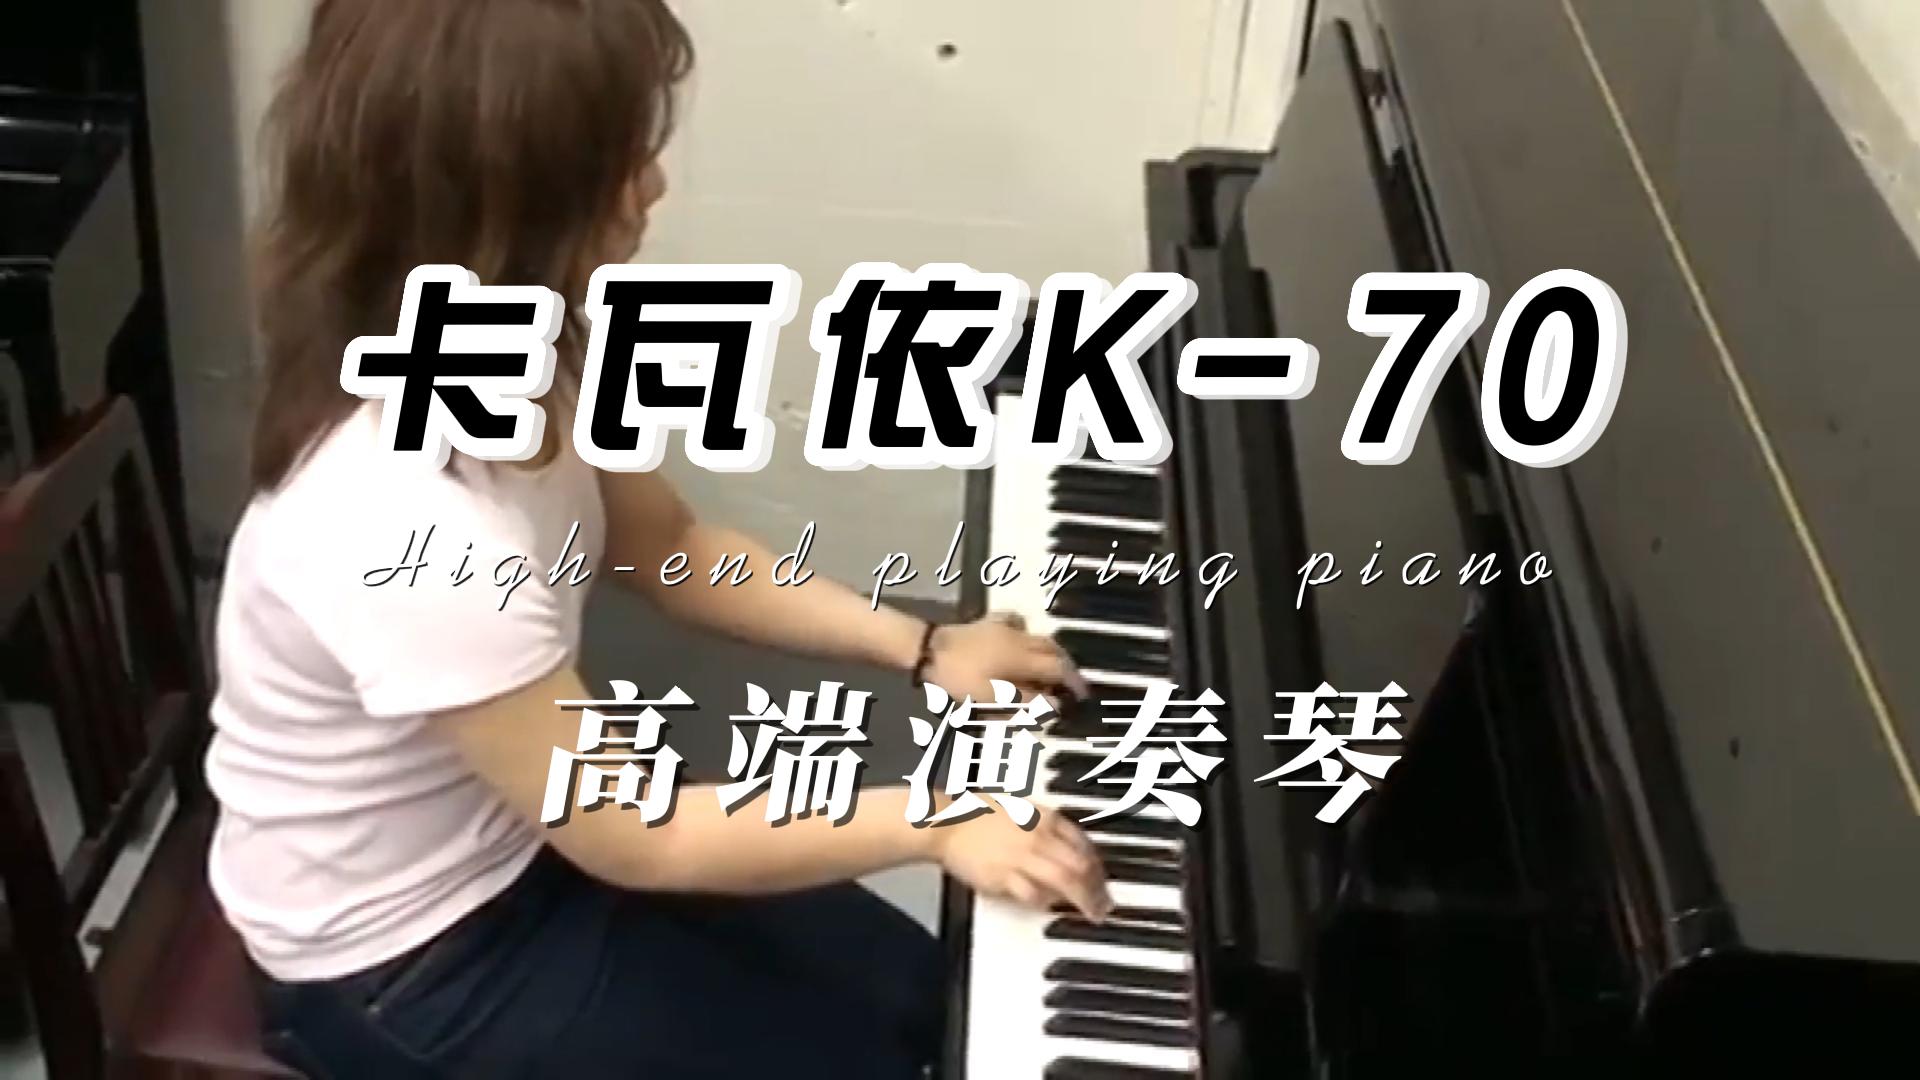 KAWAI卡瓦依K70高端演奏立式钢琴试奏-柏通琴行整理